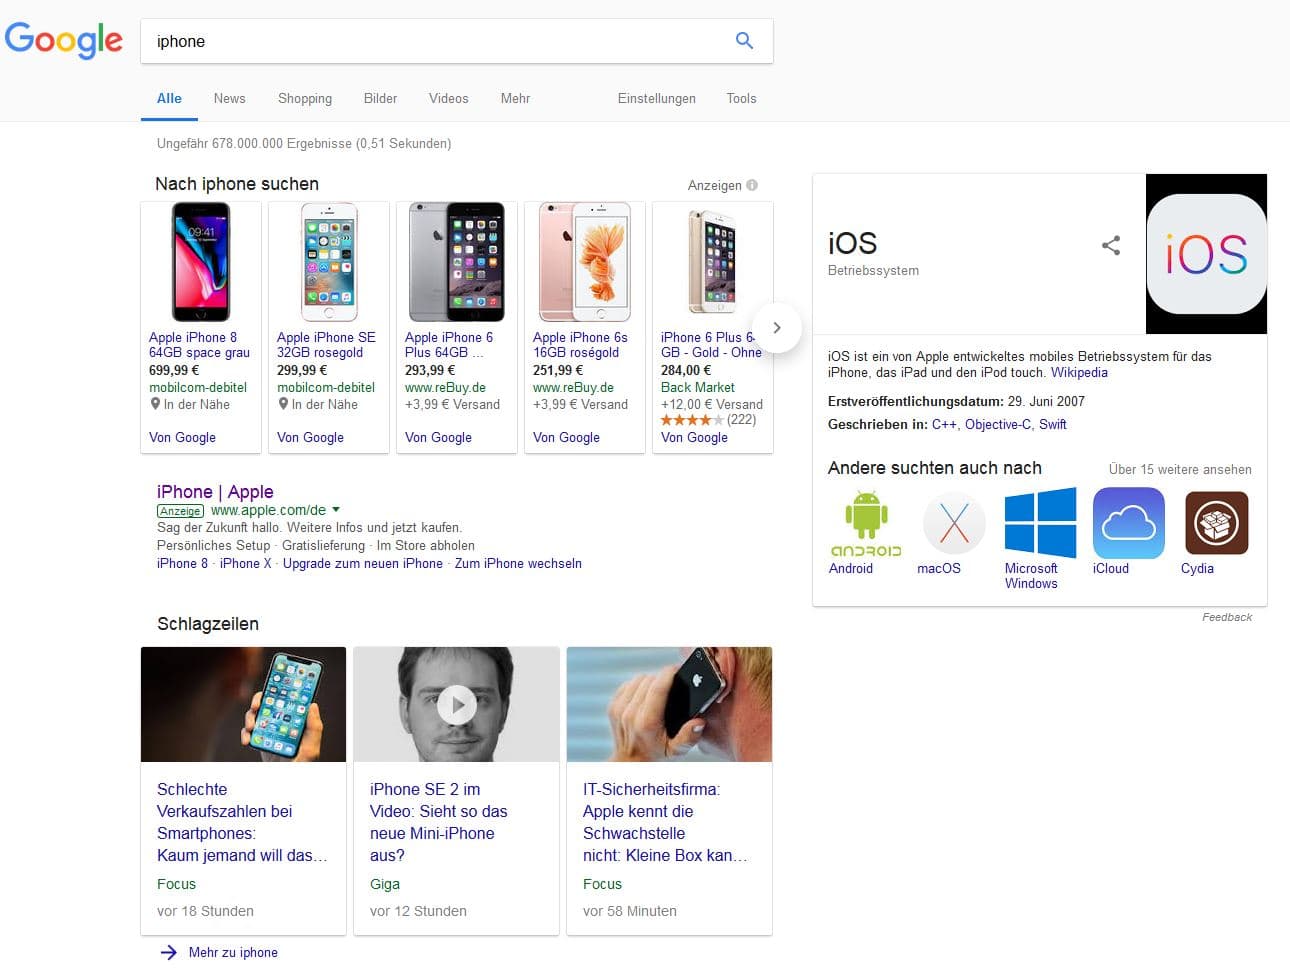 Google Shopping Anzeige (ehemals Froogle)